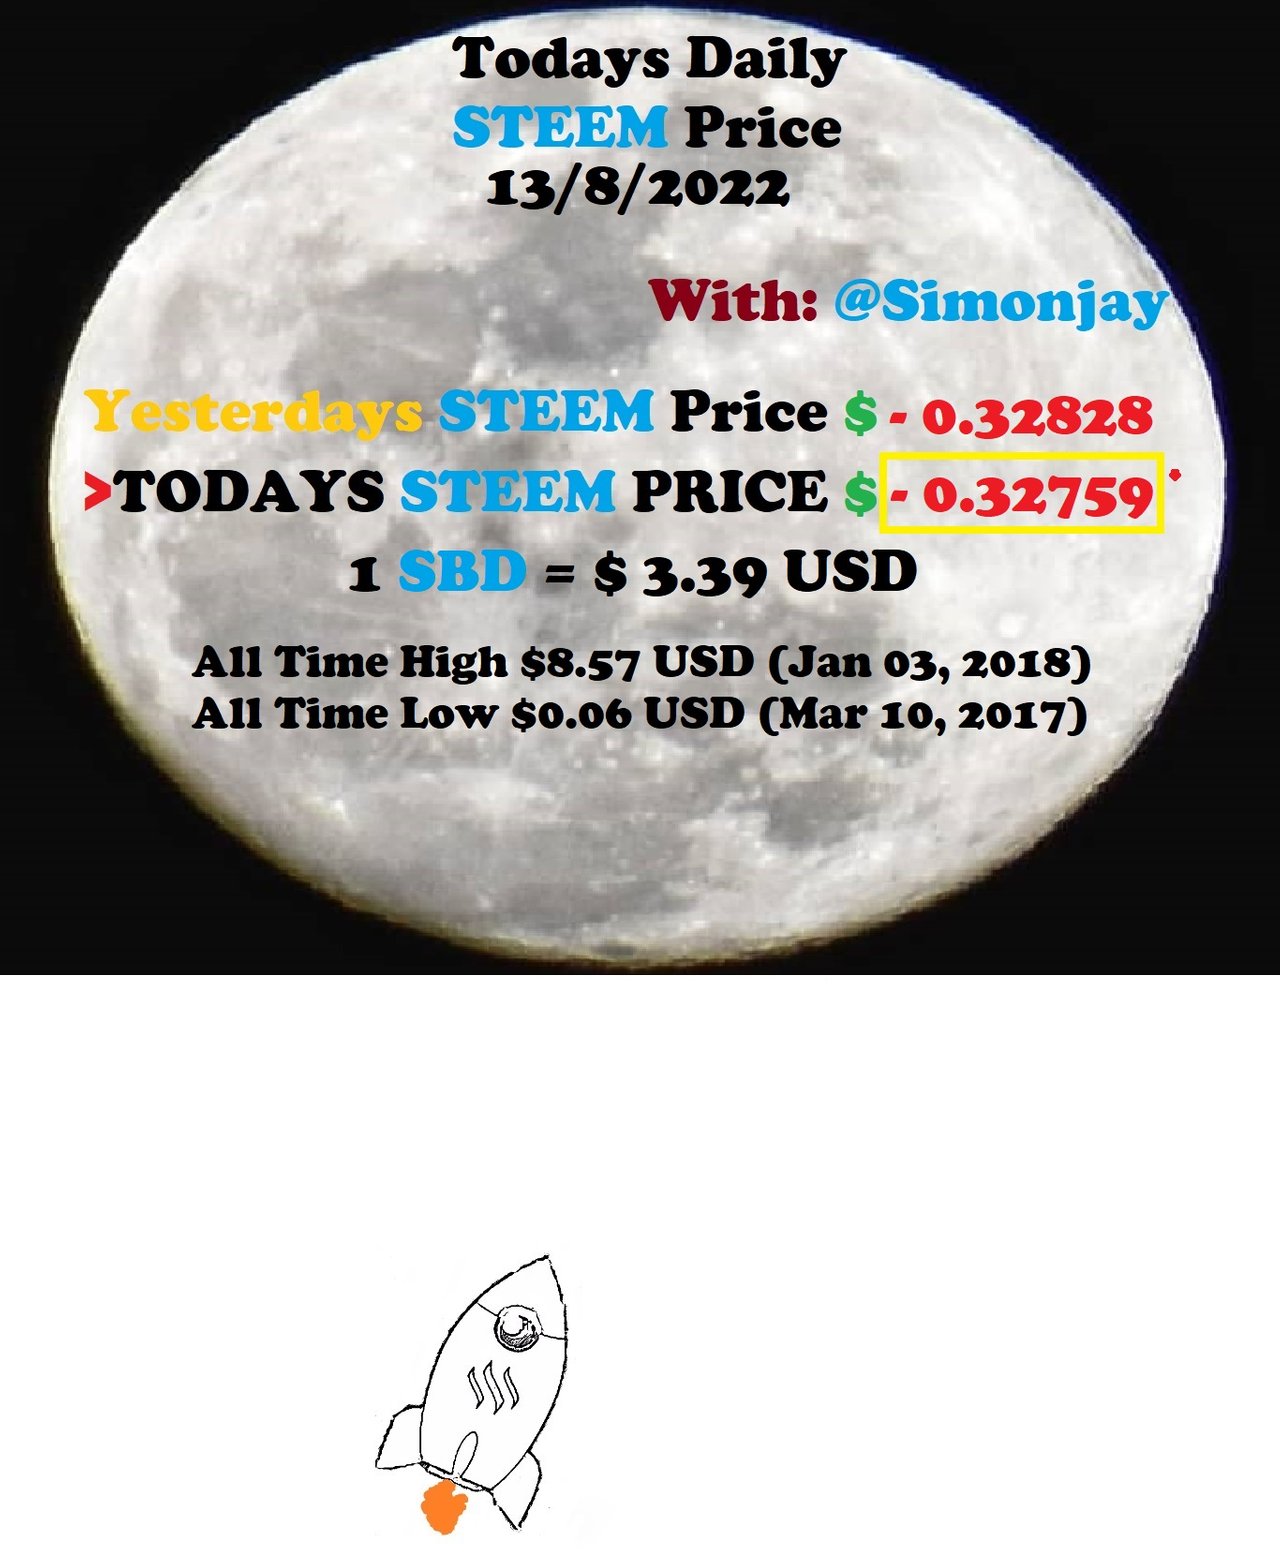 Steem Daily Price MoonTemplate13082022.jpg